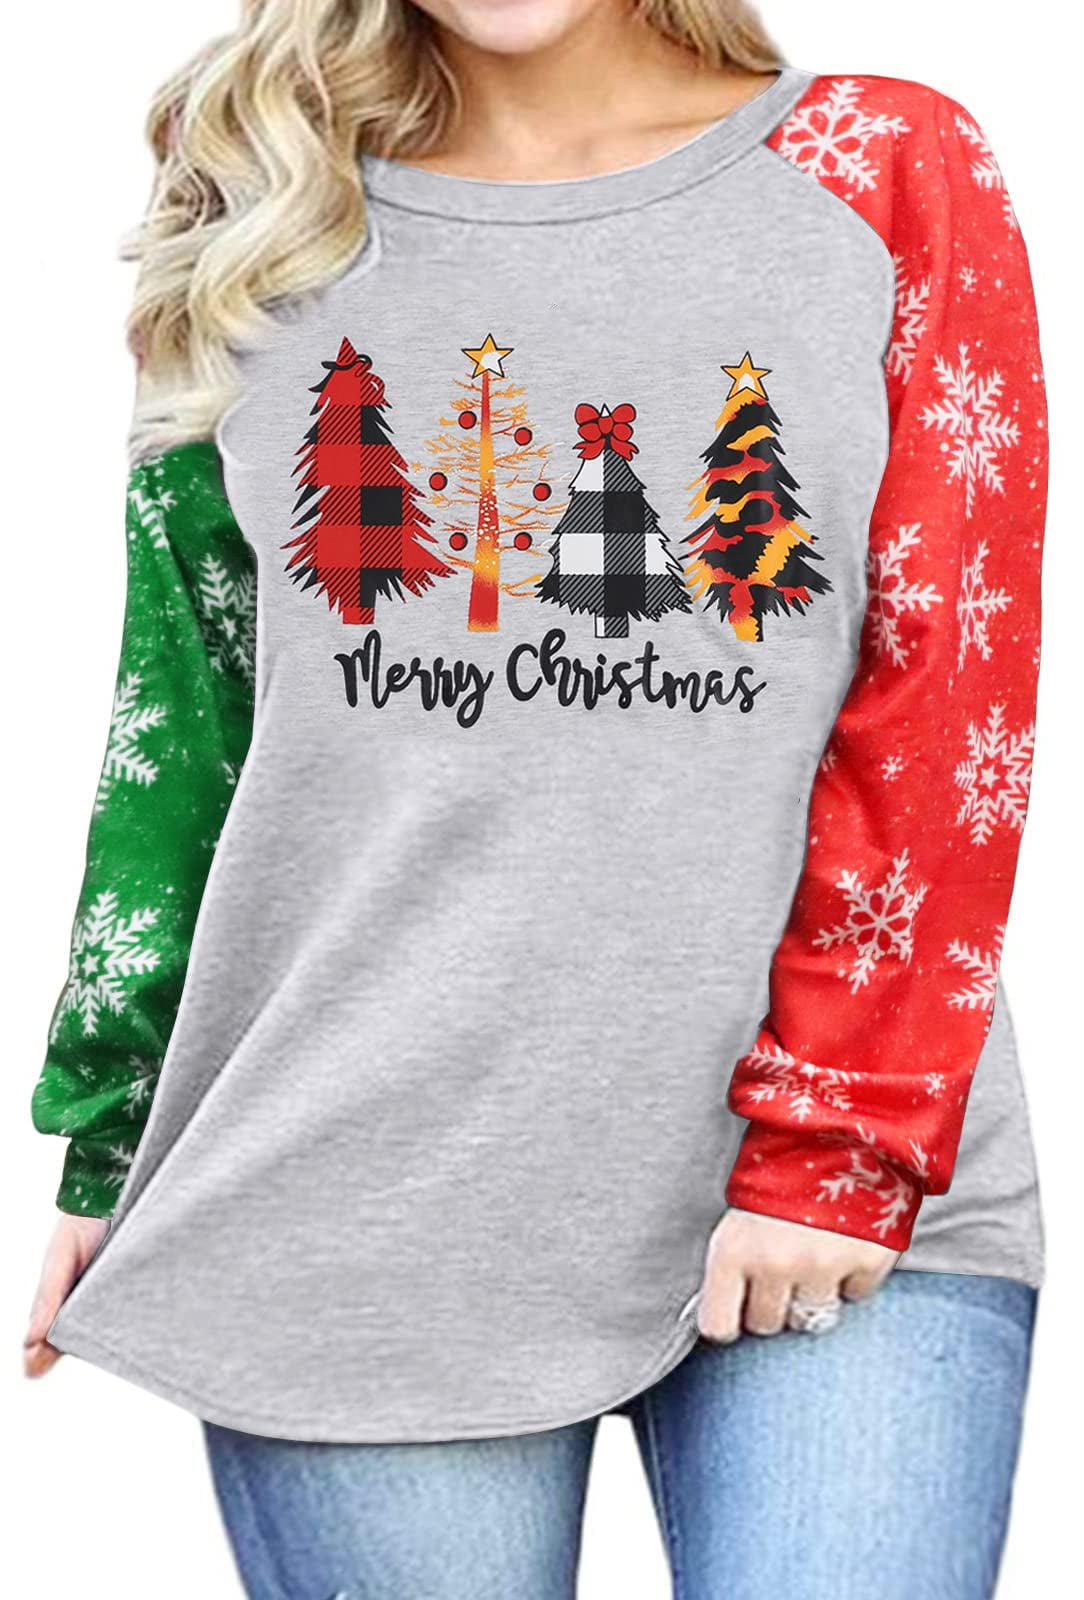 KimSoong Christmas Plus Size Shirts Women Merry Christmas Tree ...